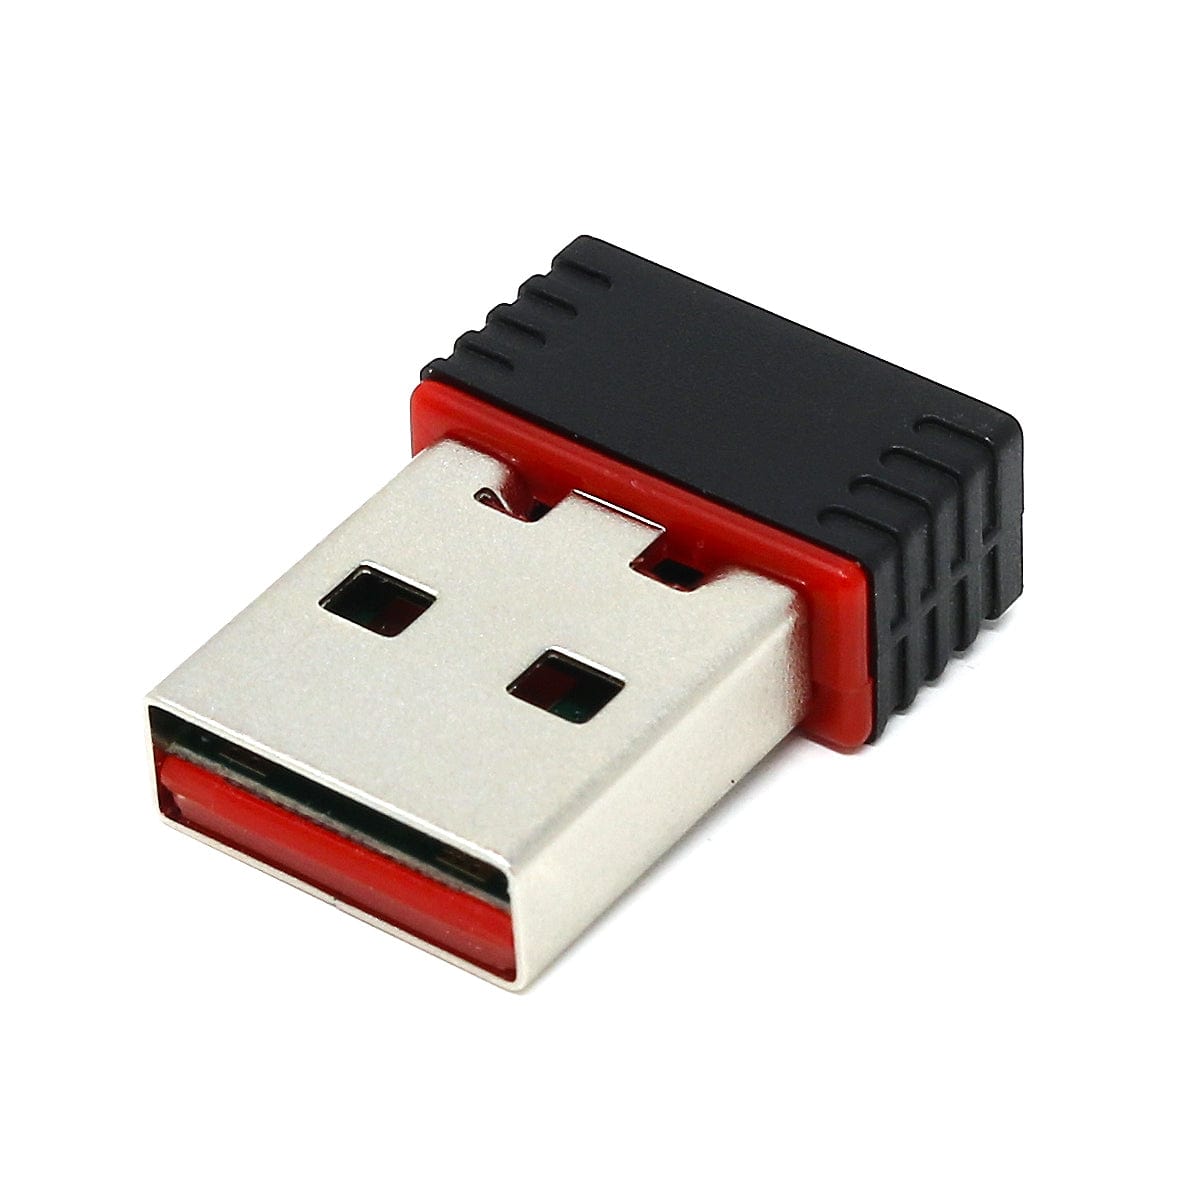 embrague cubierta tengo sueño USB WiFi Adapter for Raspberry Pi | The Pi Hut